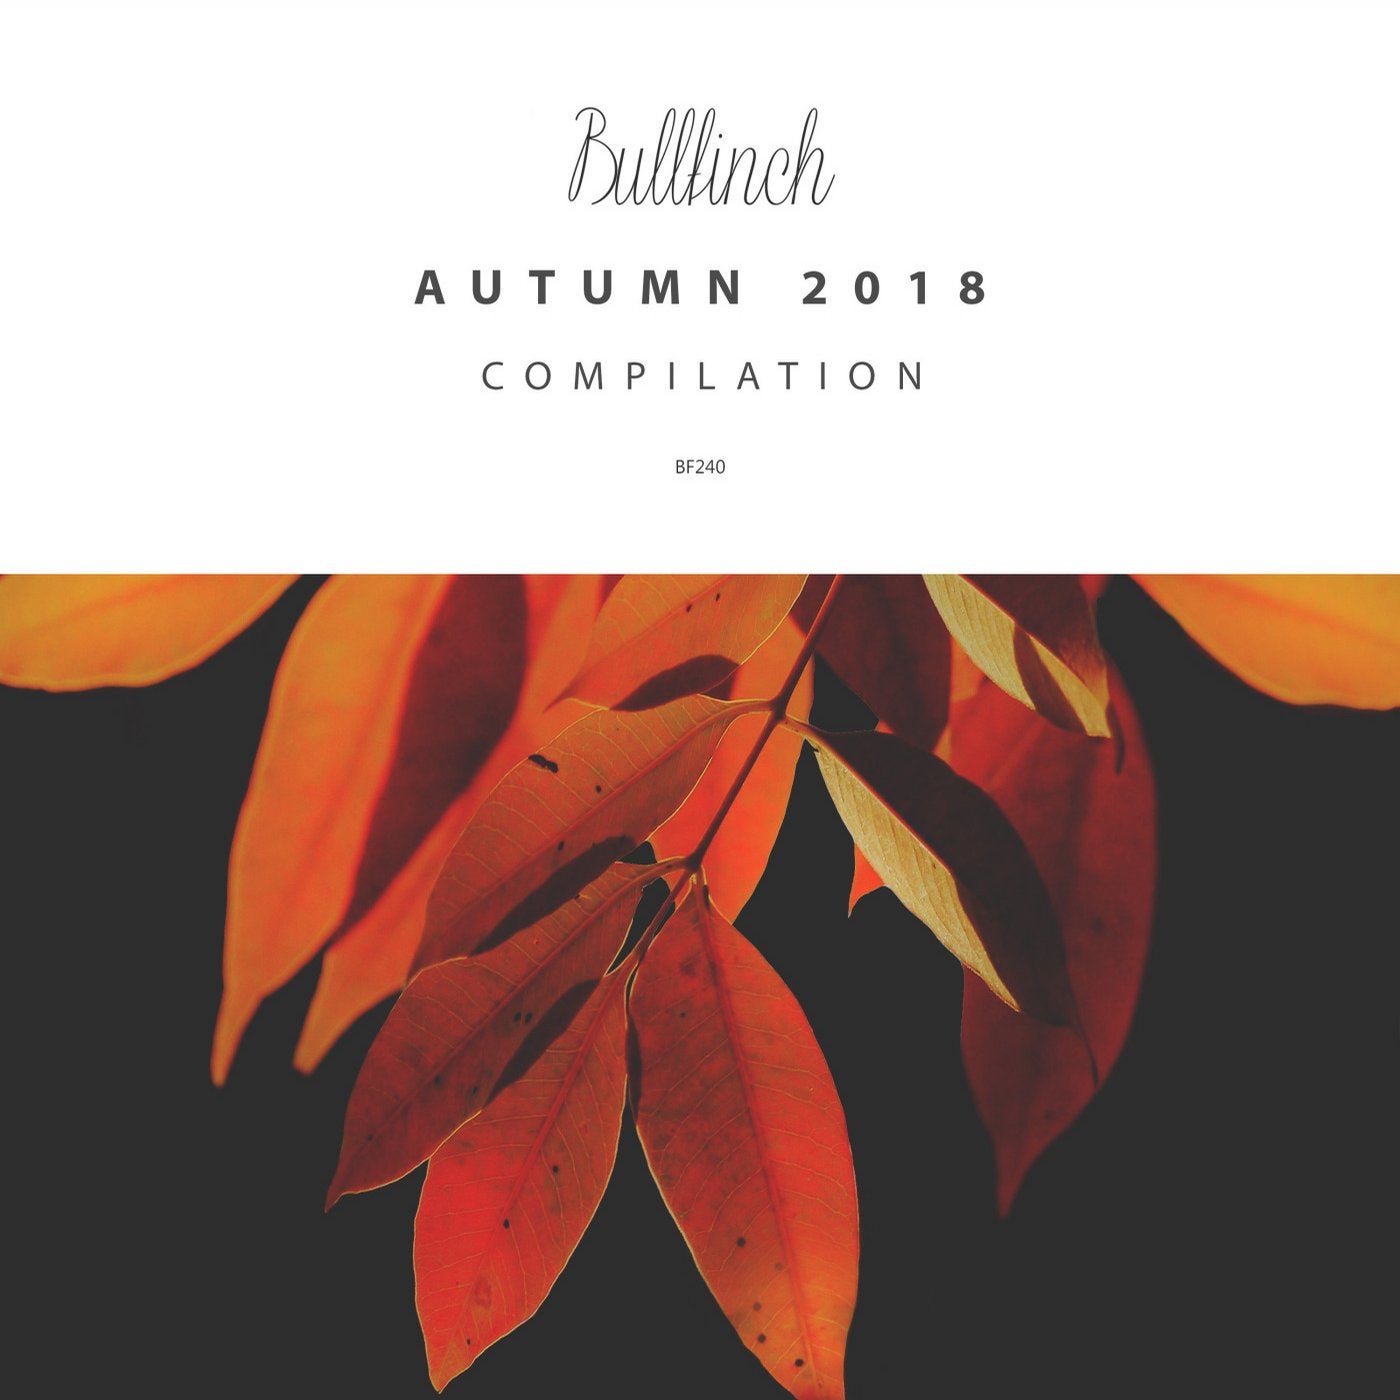 Bullfinch Autumn 2018 Compilation